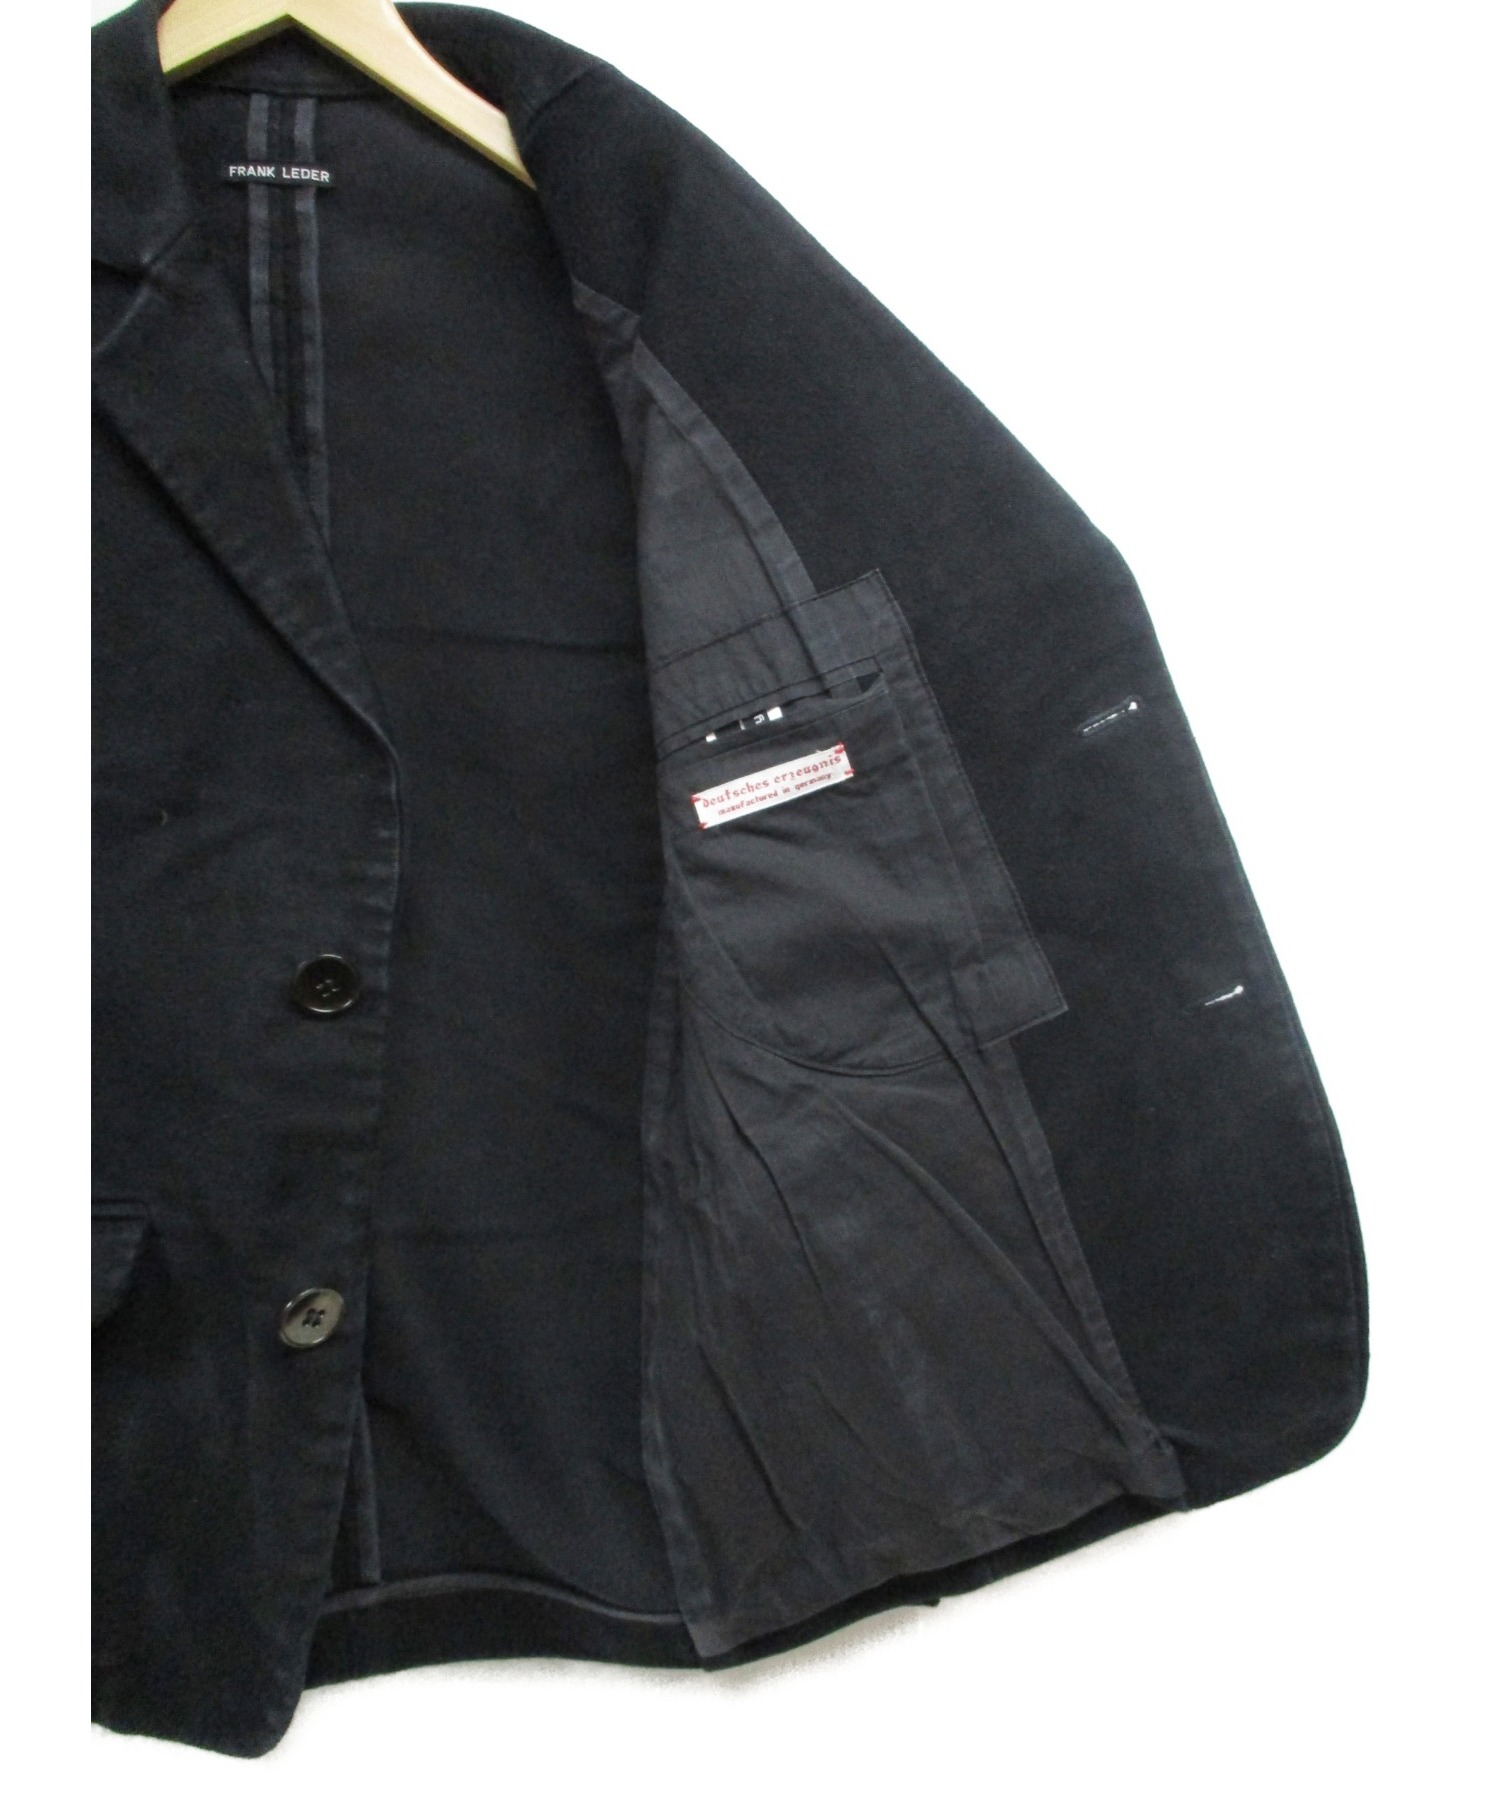 FRANK LEDER (フランクリーダー) ジャーマンレザージャケット ブラック サイズ:S